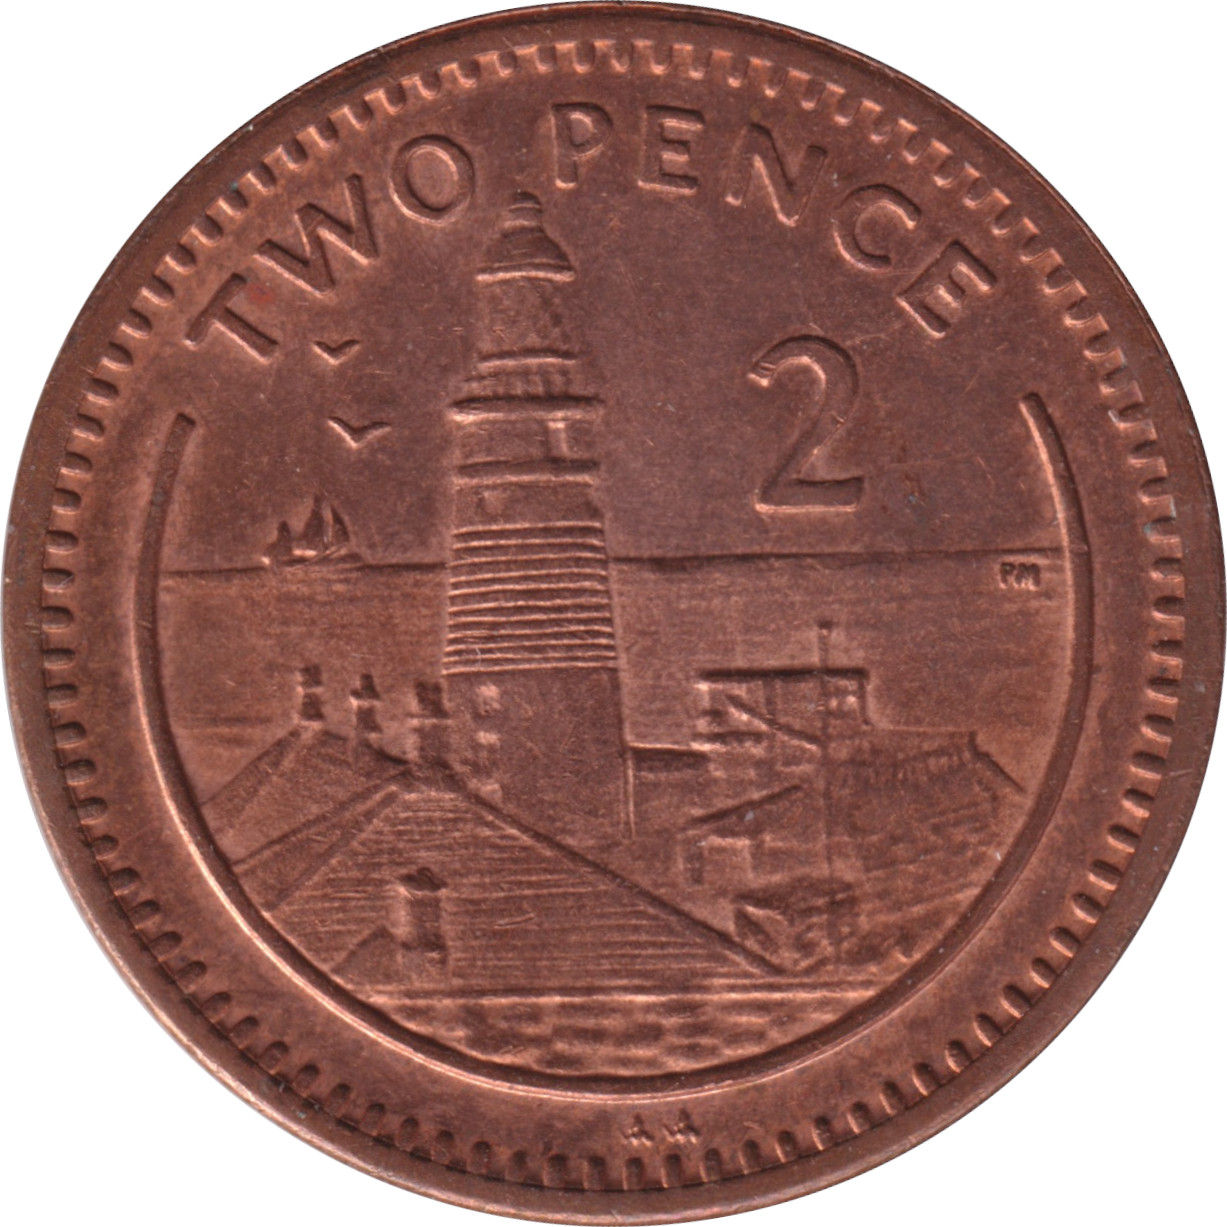 2 pence - Elizabeth II - Old head